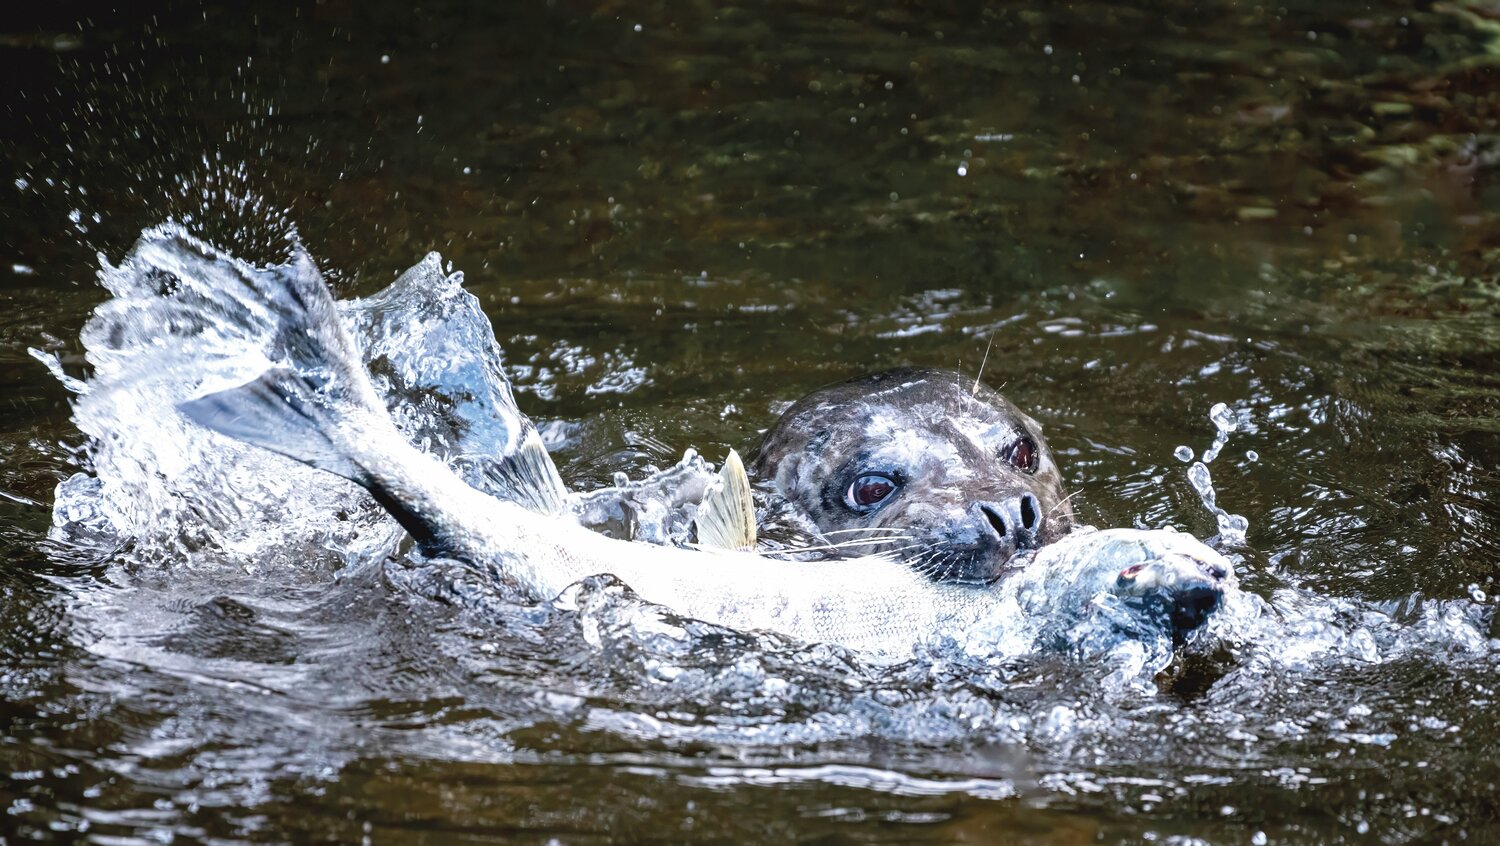 A harbor seal loves fishing near the Minter Creek Fish Hatchery.